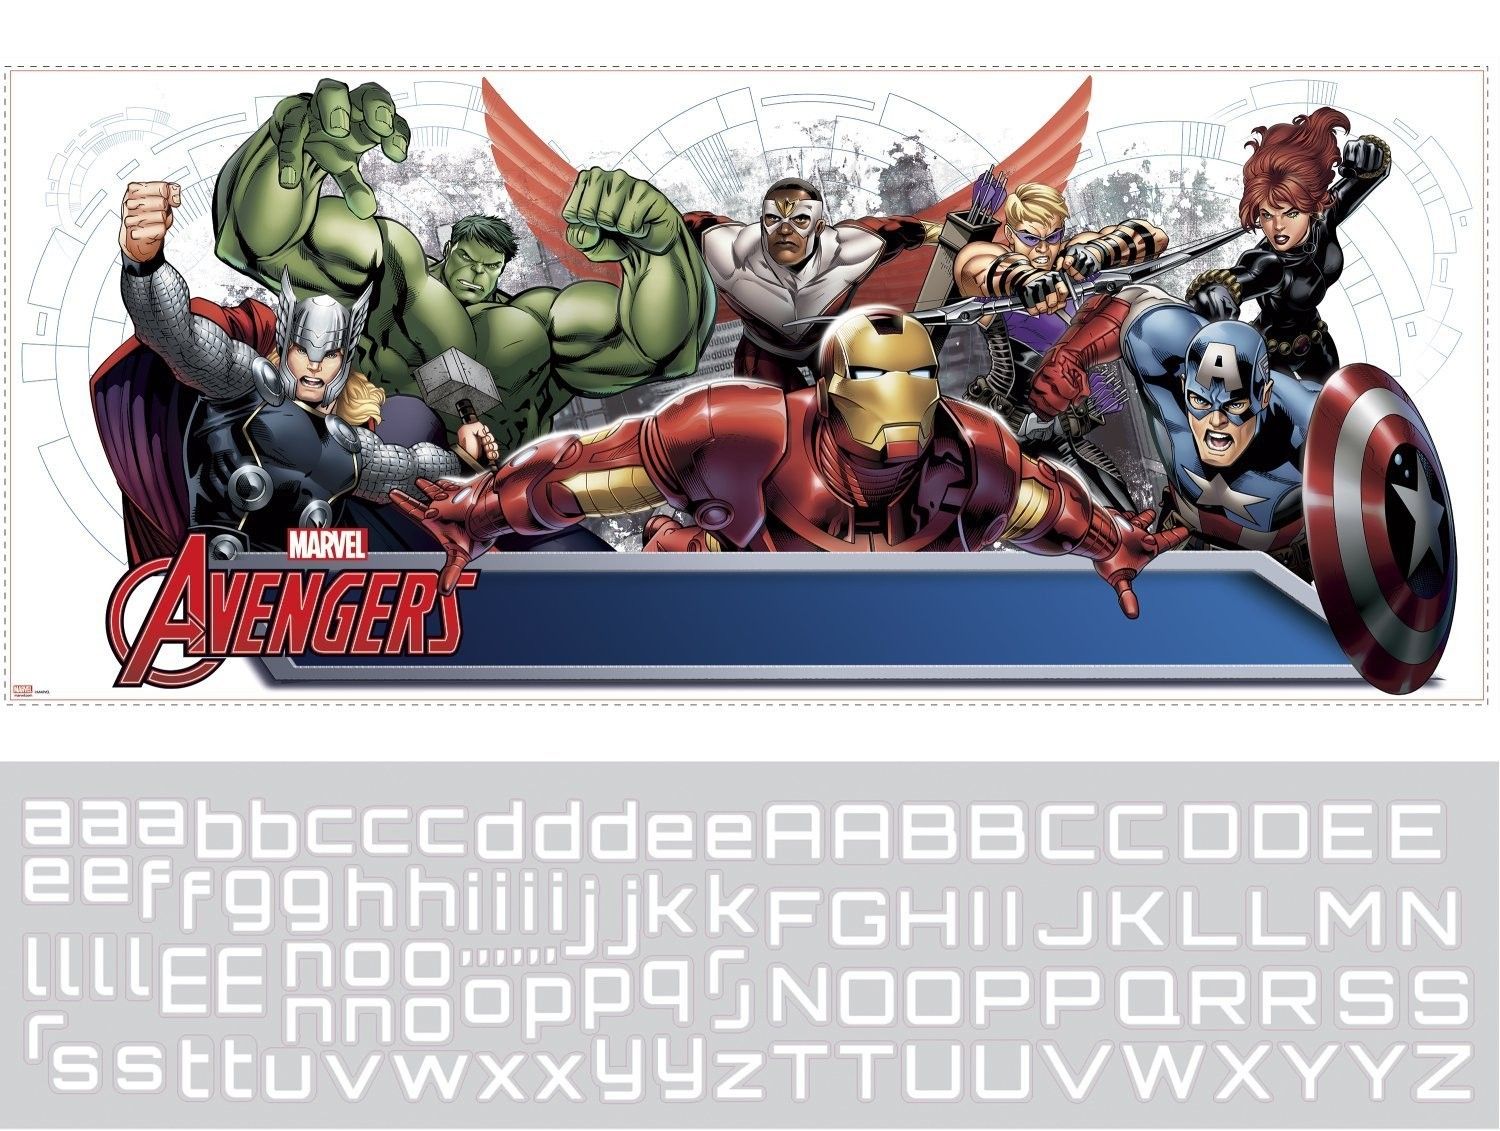 Room mates Avengers Assemble W/Pz Headboard